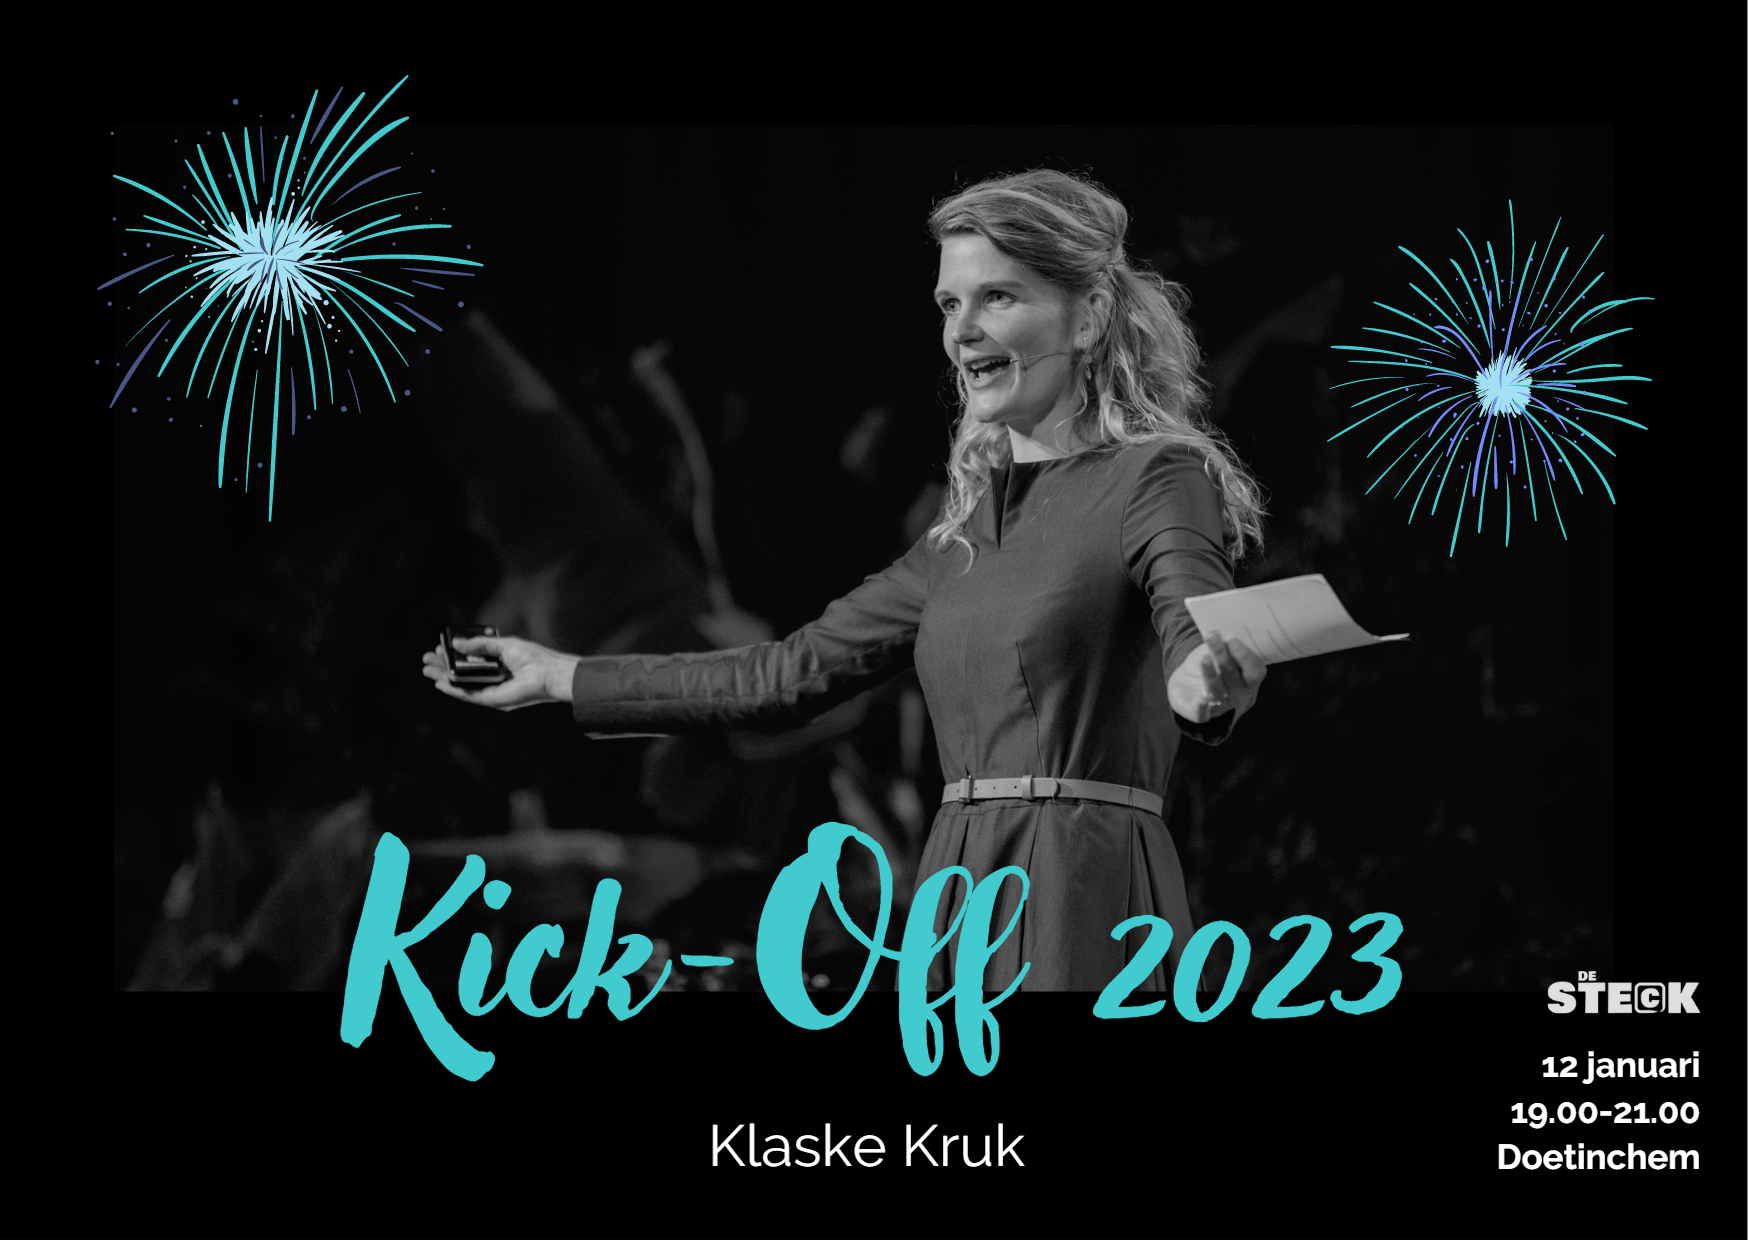 Kick-Off 2023